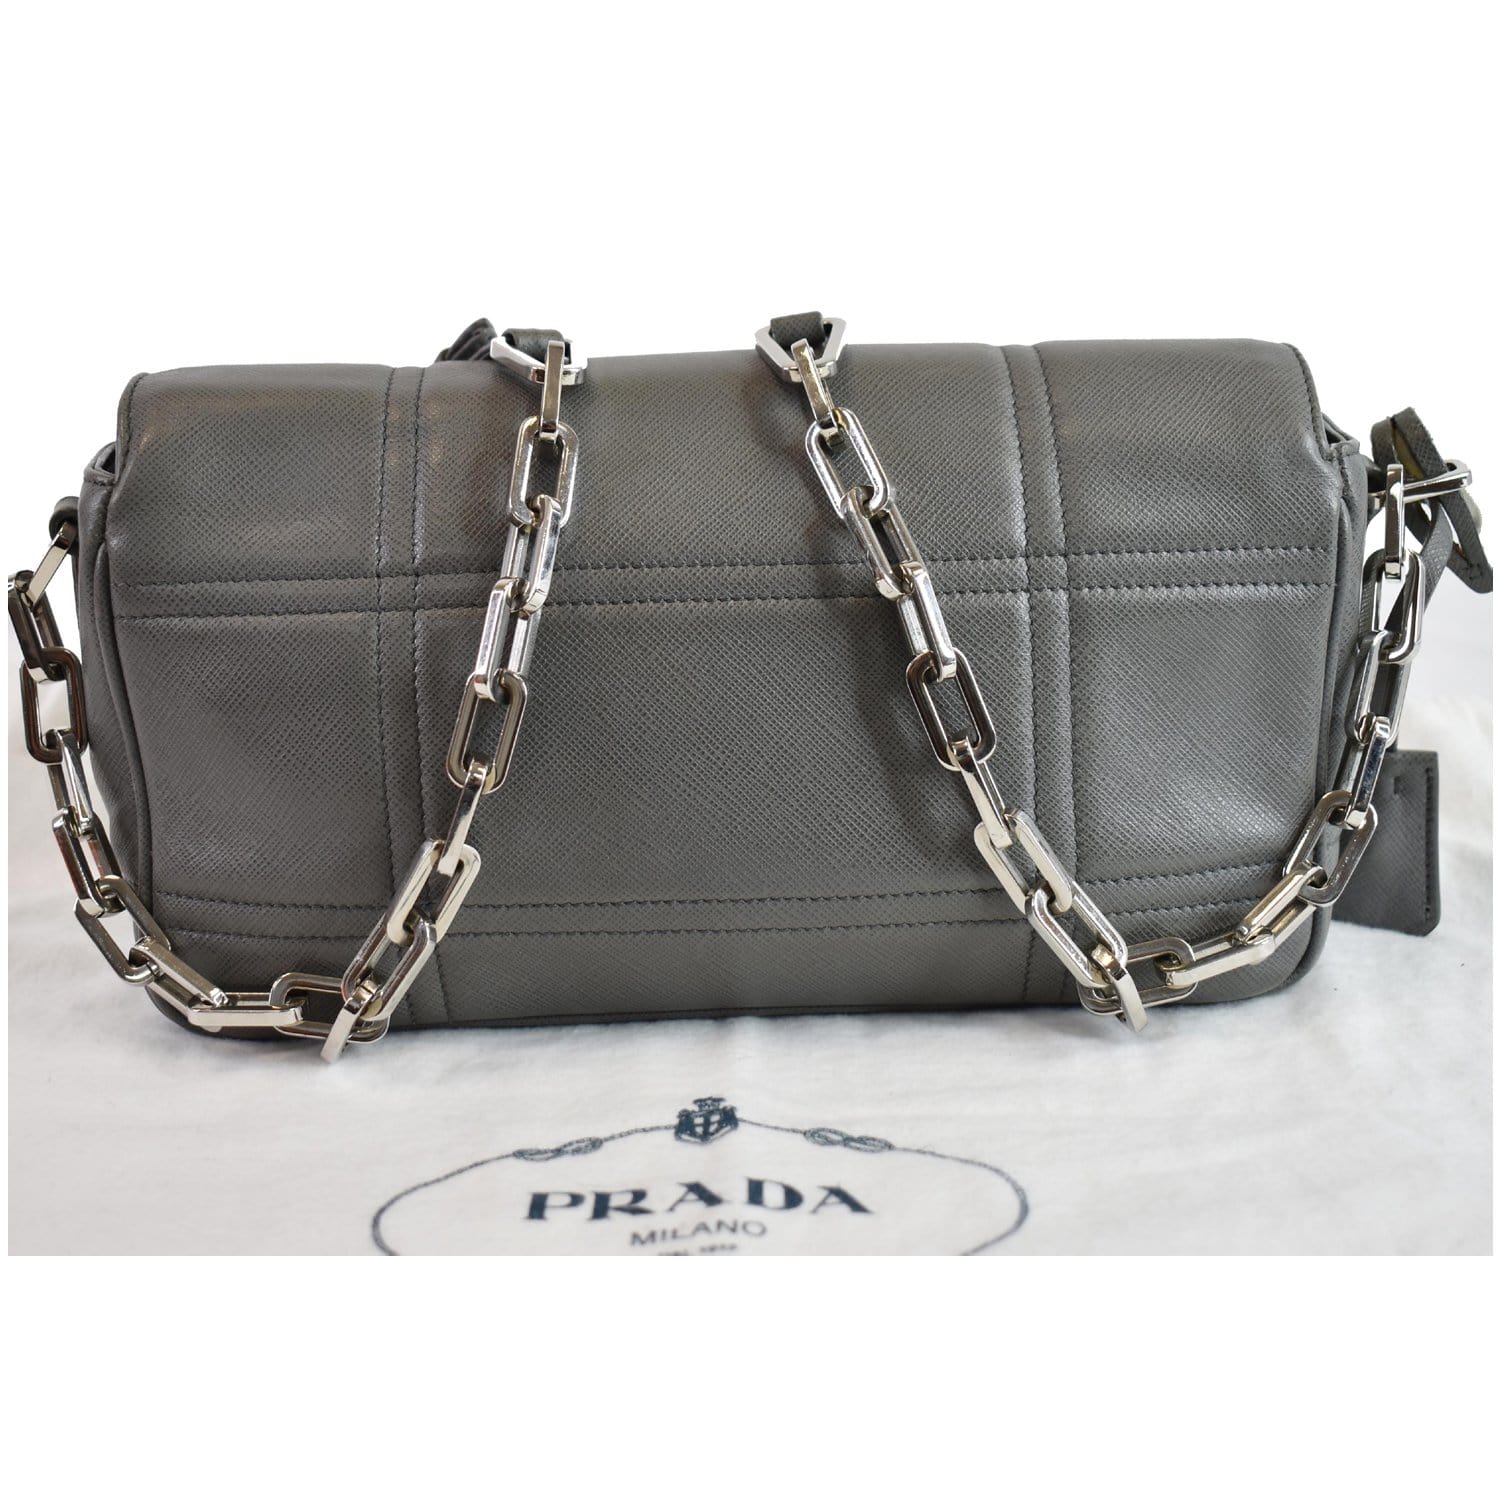 Prada Saffiano Leather Shoulder Bag Review - Glamour and Gains